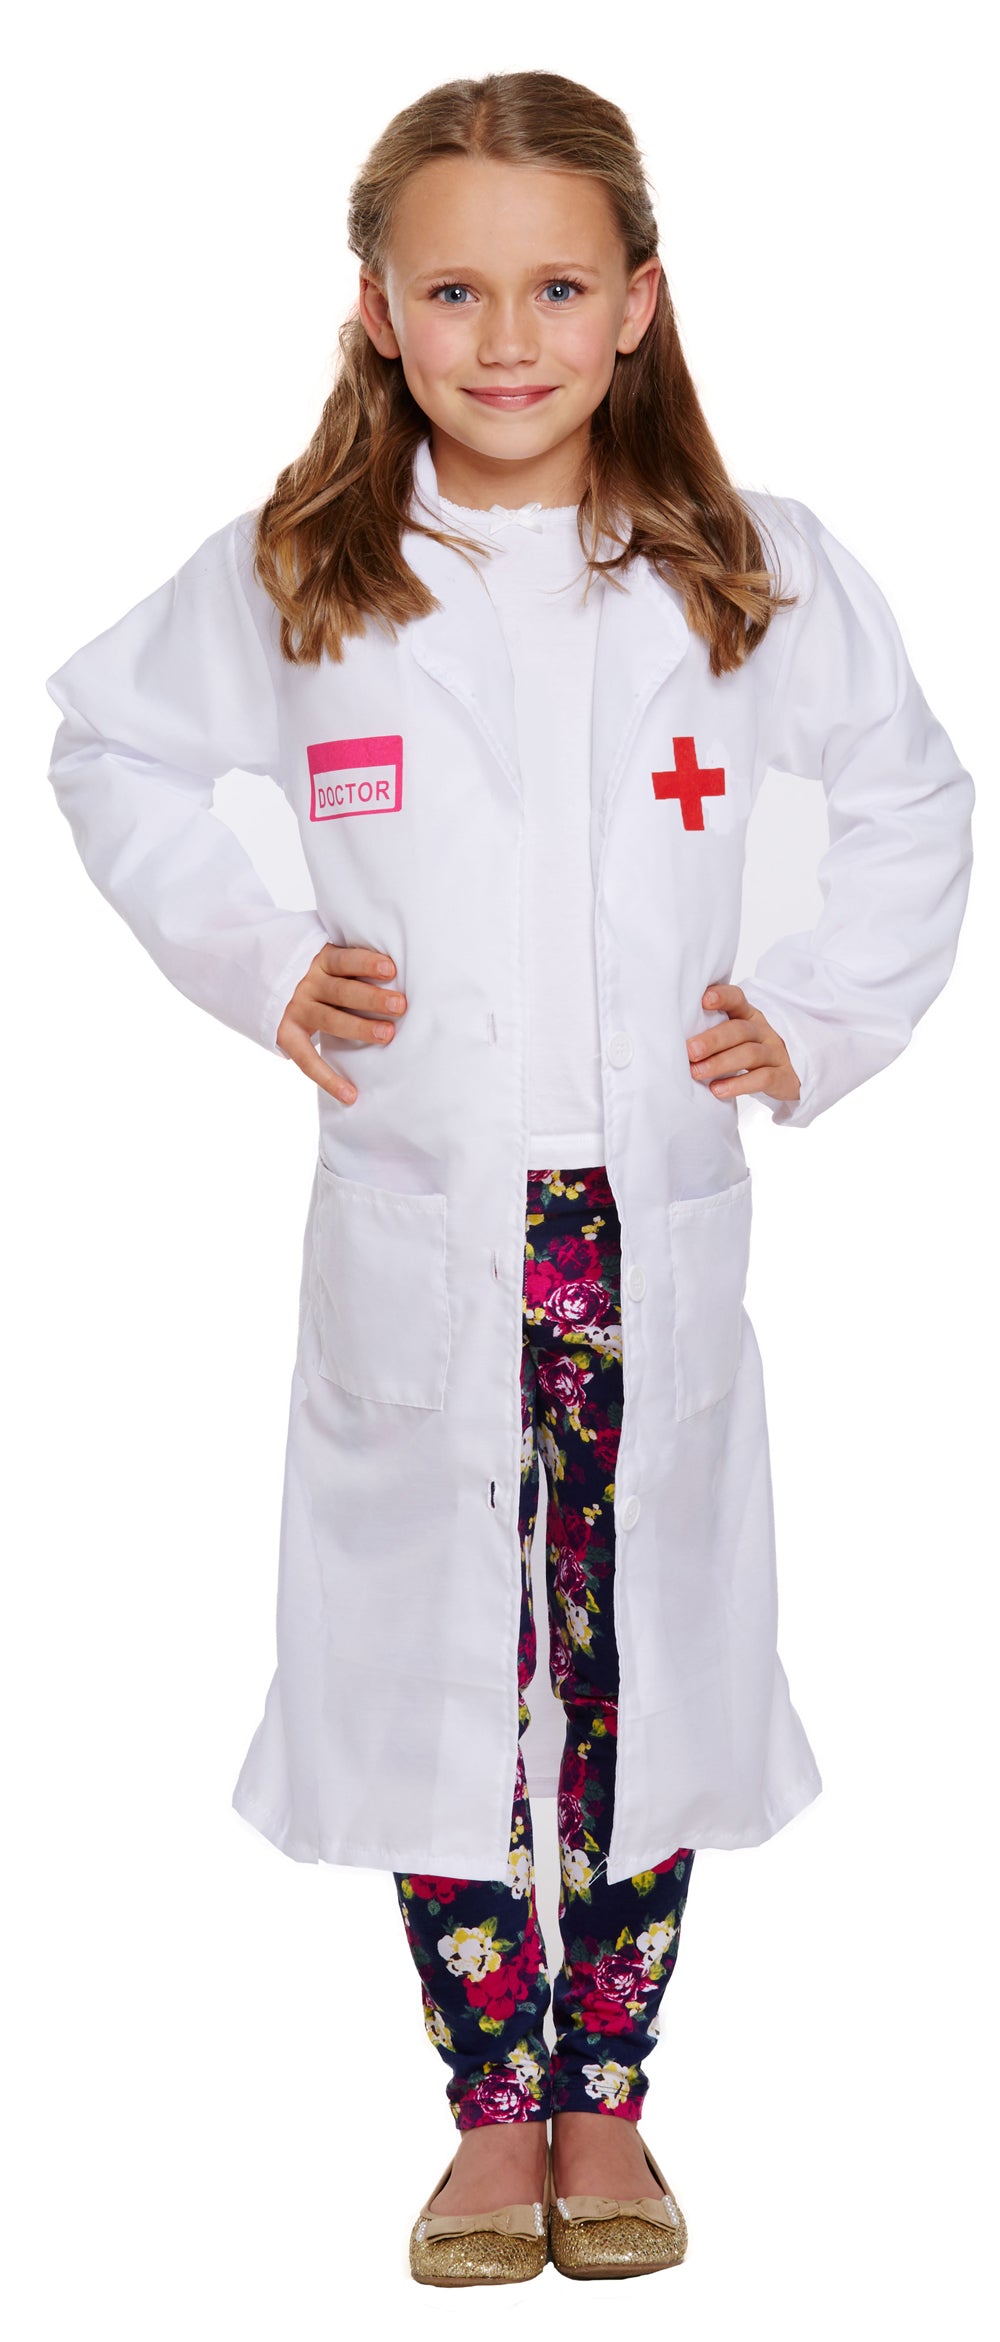 Doctor Girls Medical Professional Coat Costume